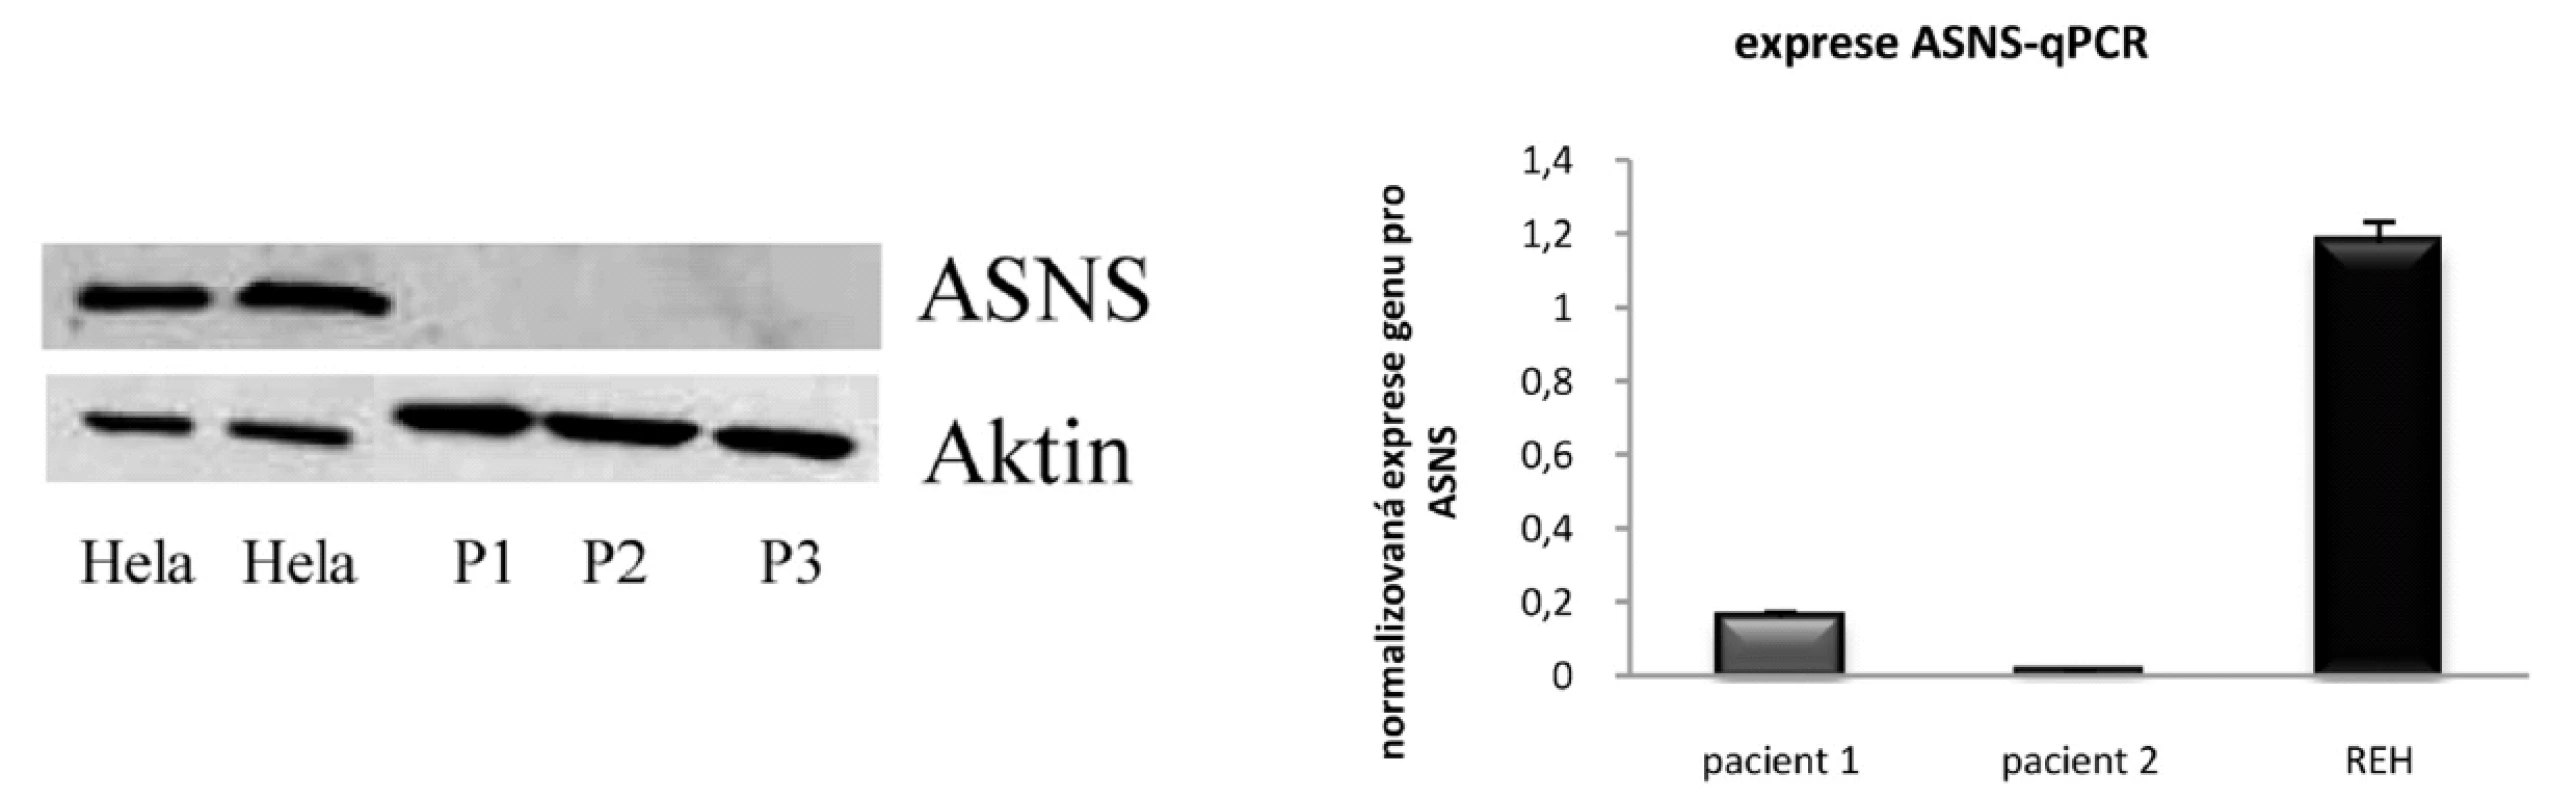 Protein ASNS detekovaný metodou Western Blot u buněčné linie Hela. U klinických vzorků nebyla detekce úspěšná, P1, P2 a P3 – označení pro pacientské vzorky. Bazální hladiny genu pro ASNS stanovené pomocí qRT-PCR u linie REH a dvou klinických vzorků.